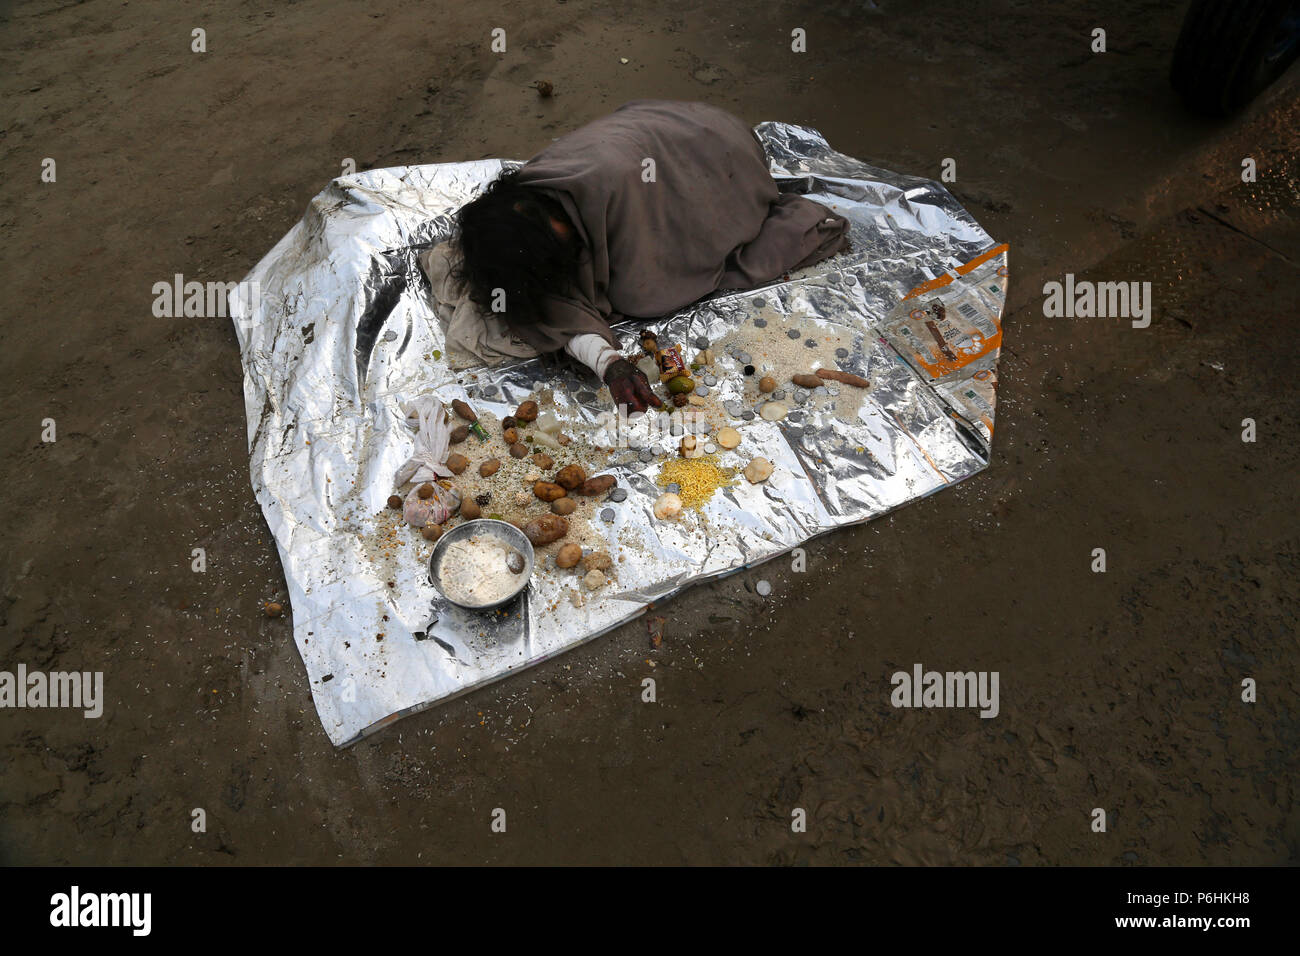 Bettler Behinderte behinderte verbrannt Maha Kumbh mela in Allahabad, Indien 2013 Stockfoto